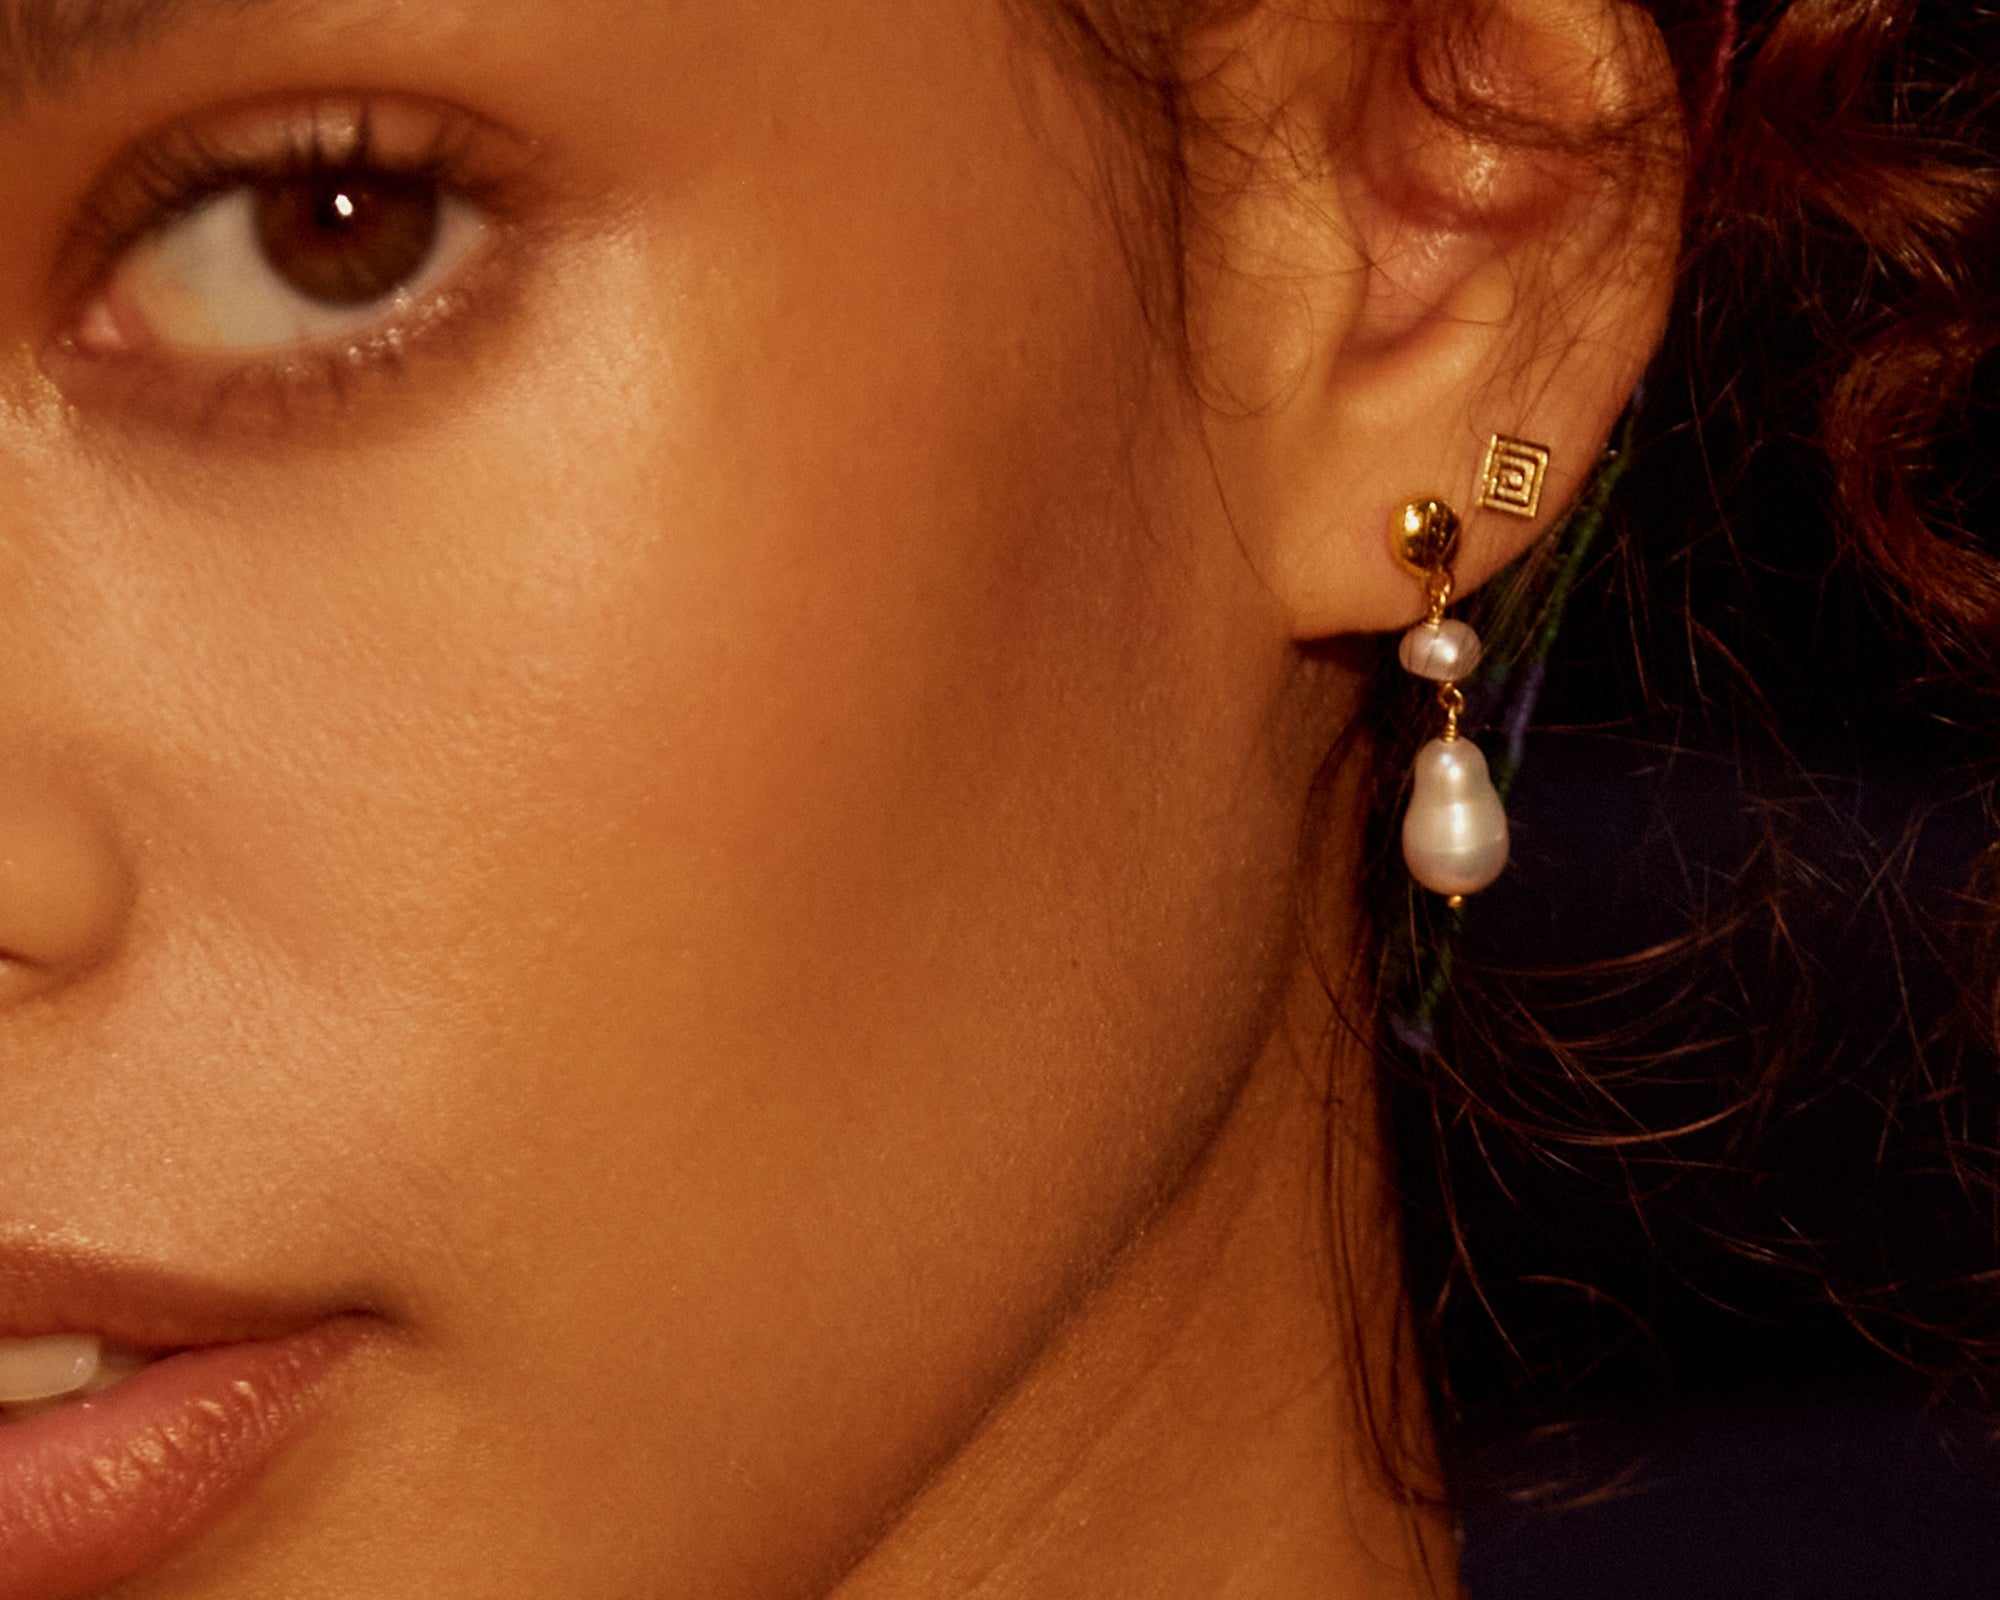 Kyra Pearl Drop Stud Earrings | Sustainable Jewellery by Ottoman Hands